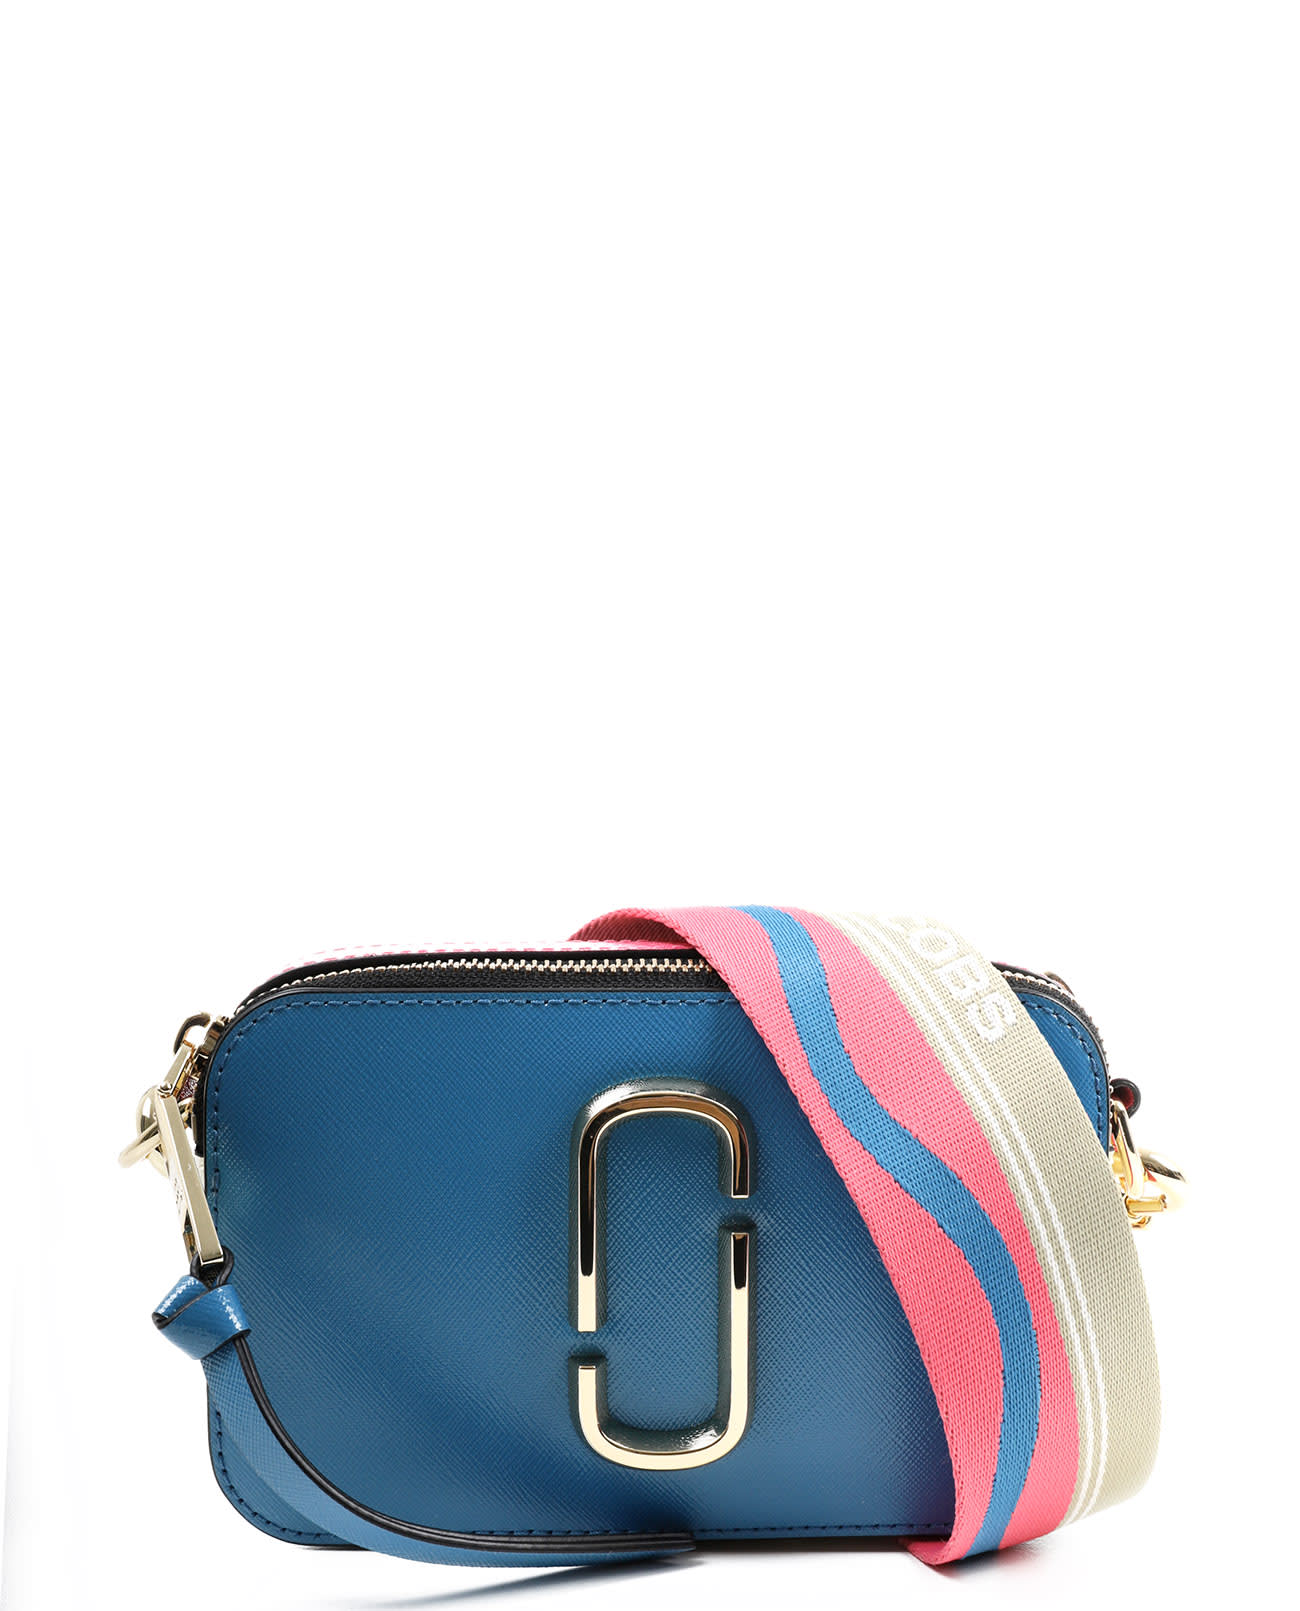 Marc Jacobs Blue Snapshot Bag